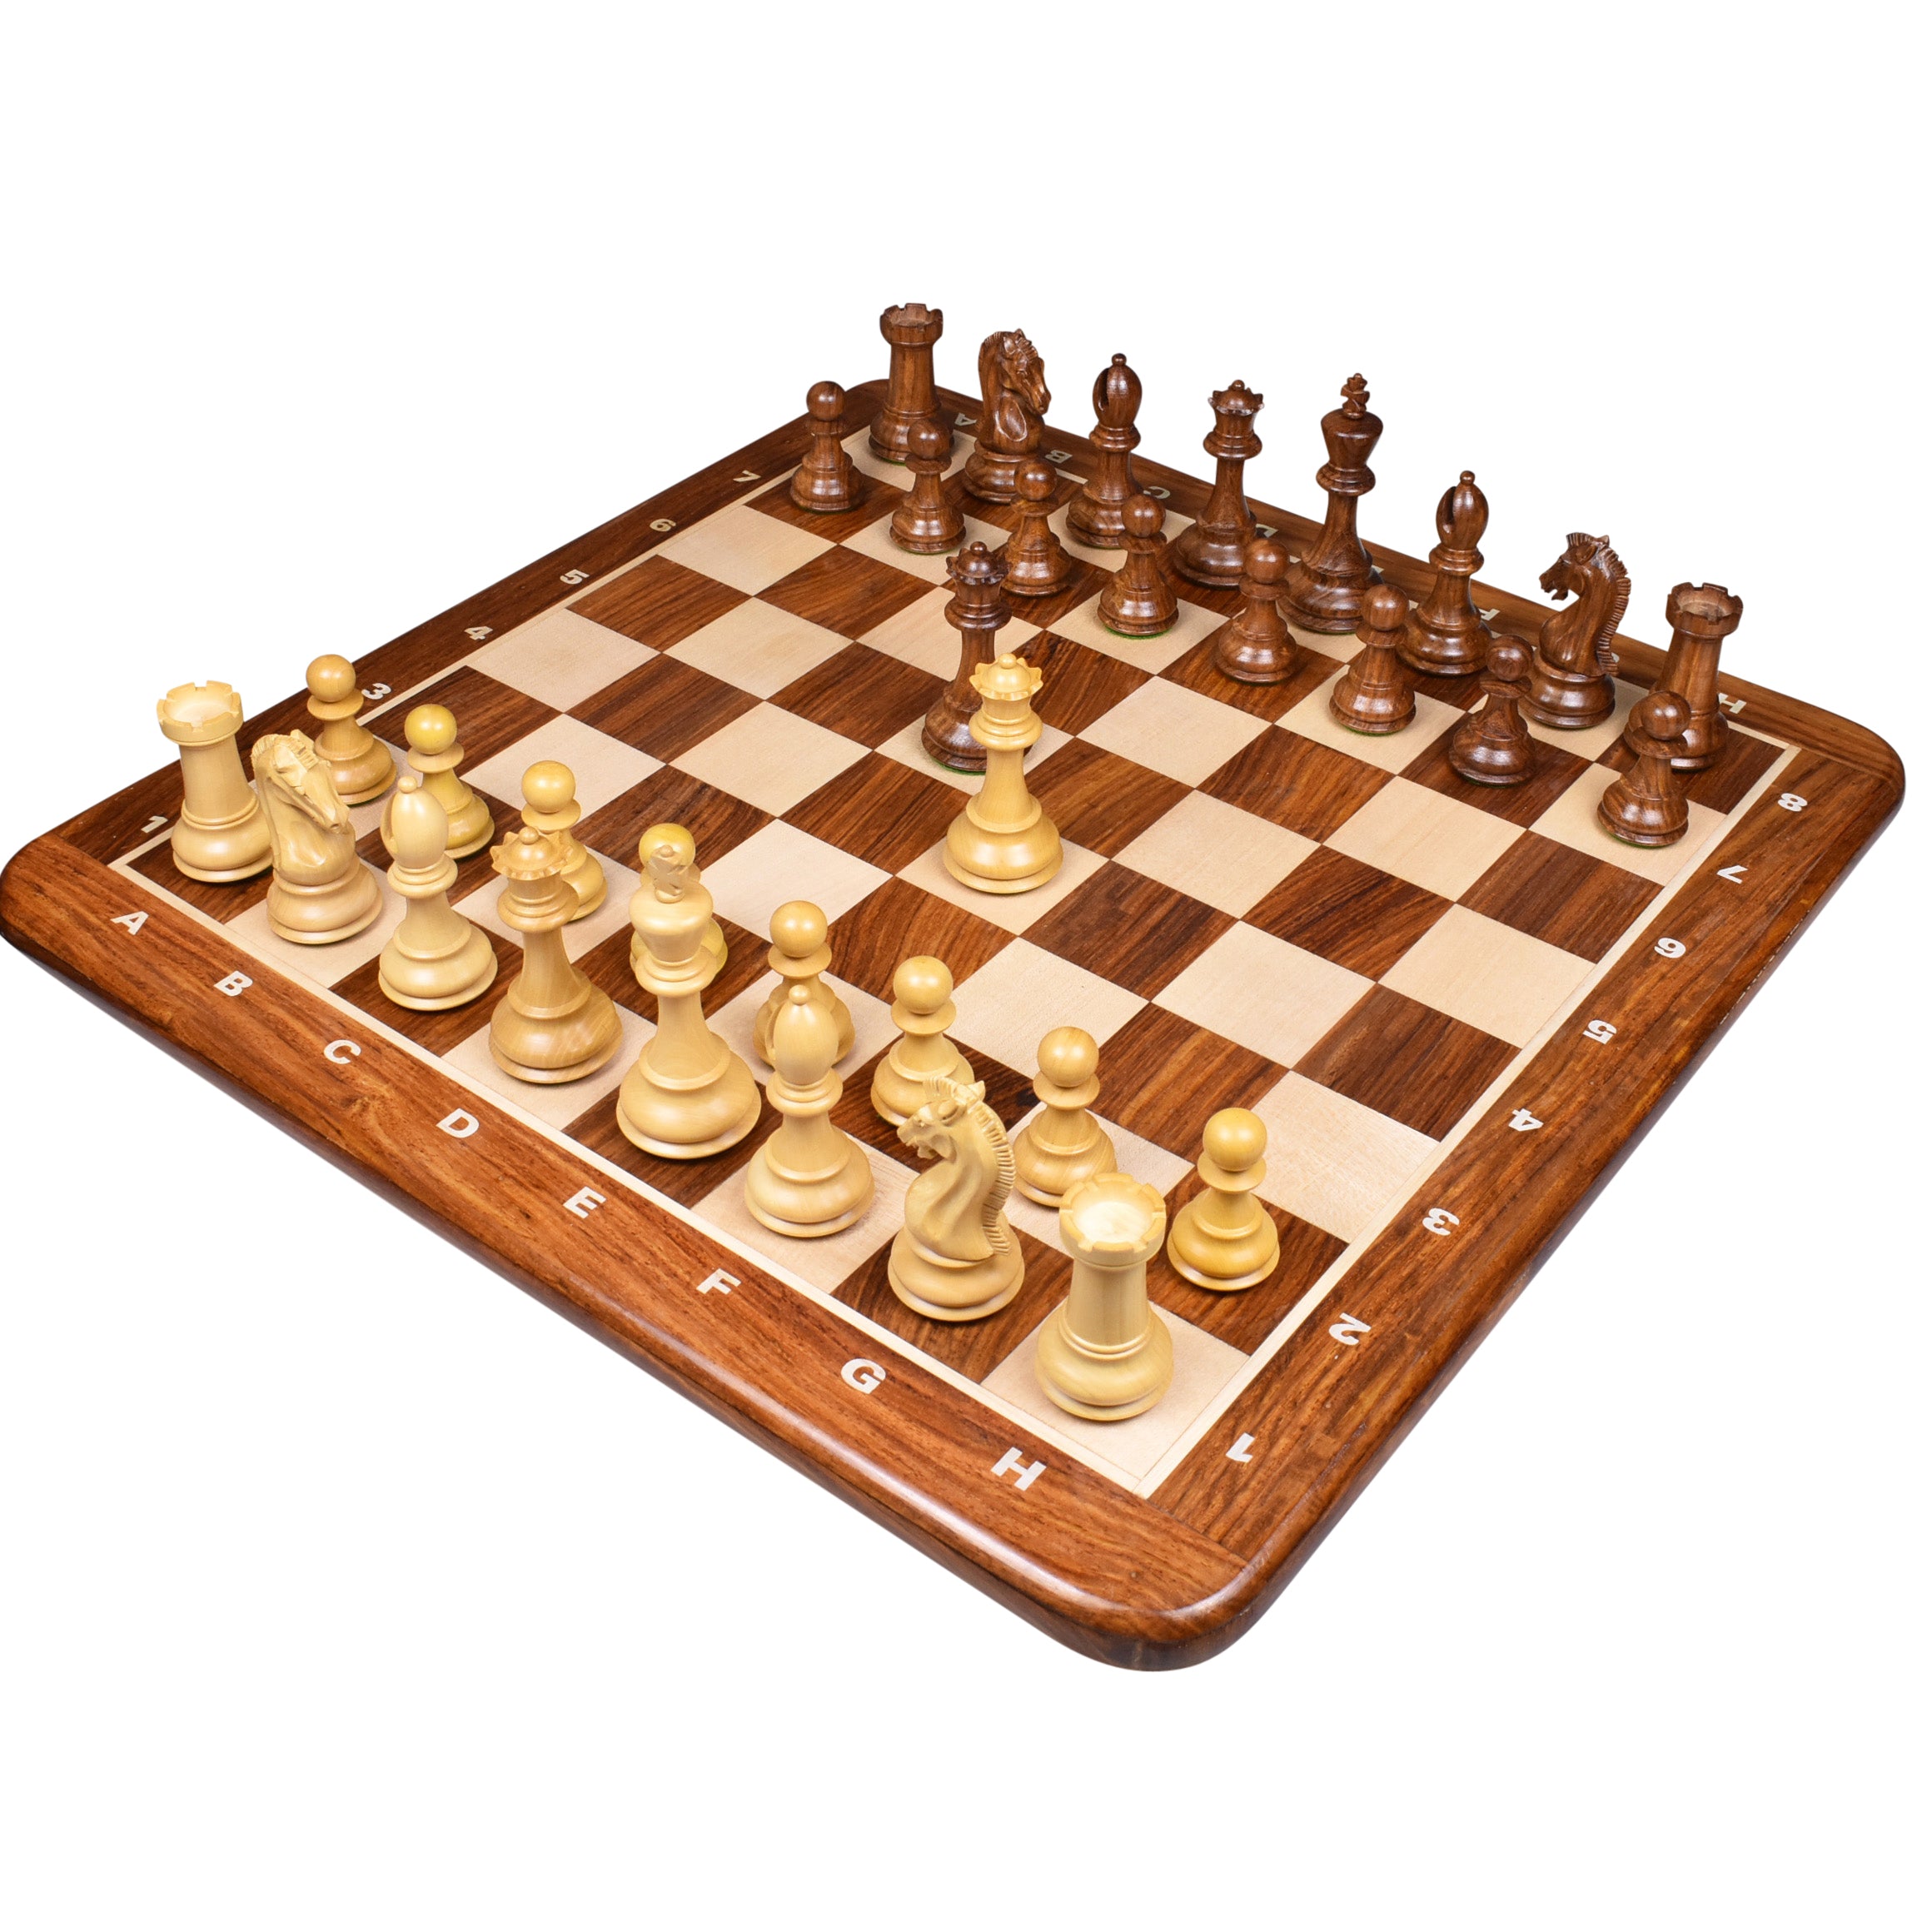 Craftsman Knight Staunton Chess Pieces Only set